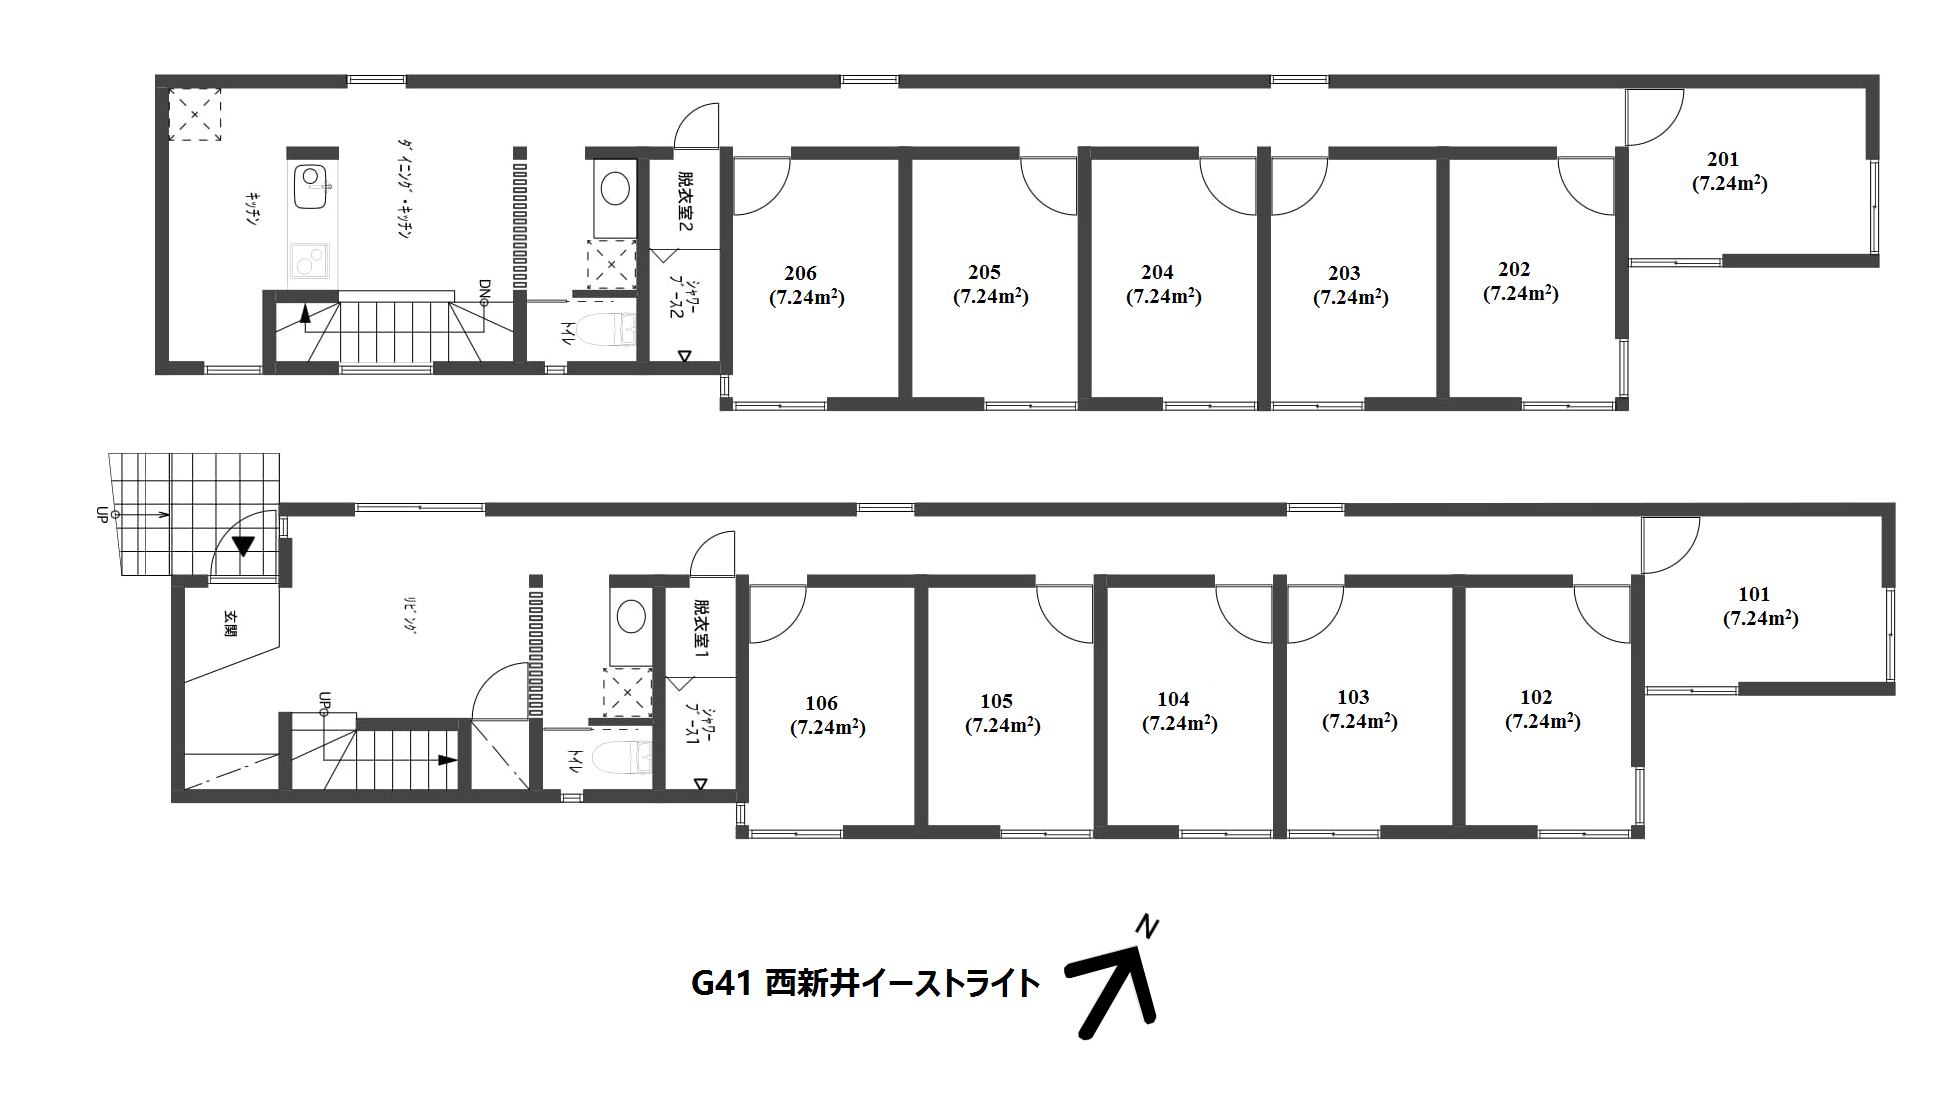 G41/J316 Tokyoβ 梅島1間取り図